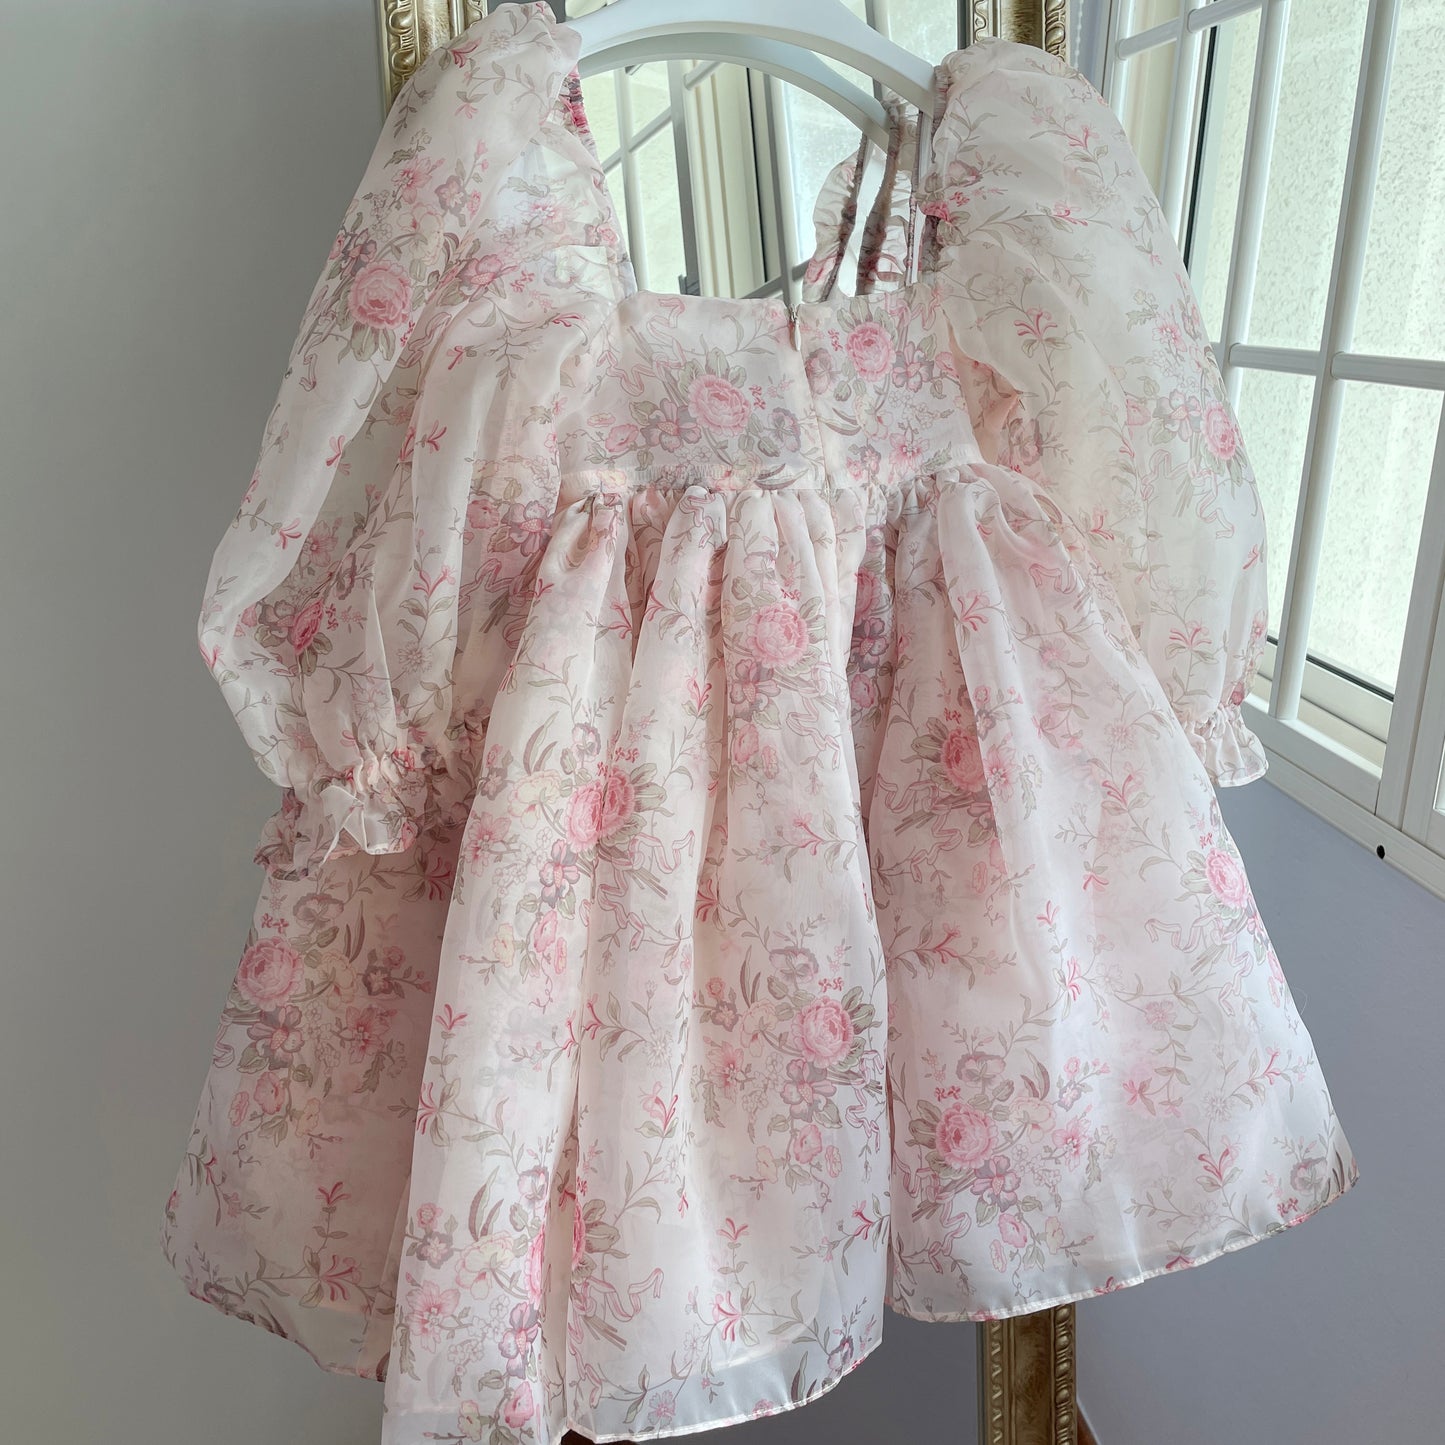 French Rose Mini Puff Dress (Pink)